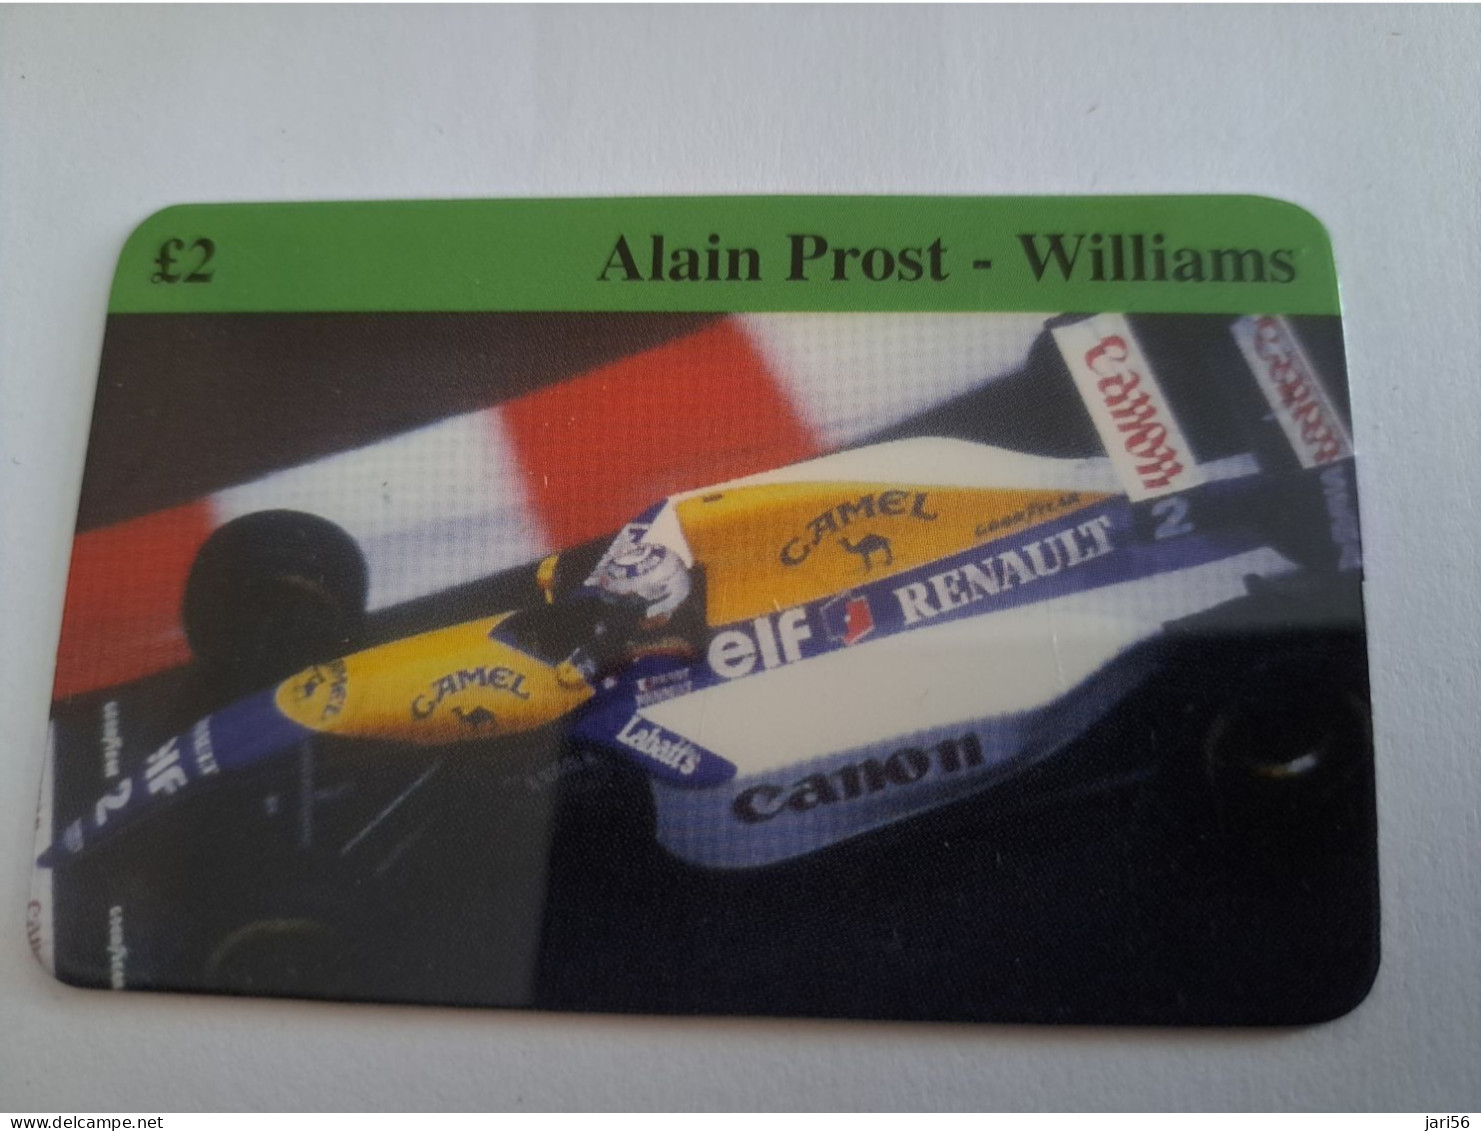 GREAT BRITAIN / 2 POUND  / RACE CAR/  ALAN PROST - WILLIAMS    /    PREPAID CARD/ USED   **15715** - Collezioni